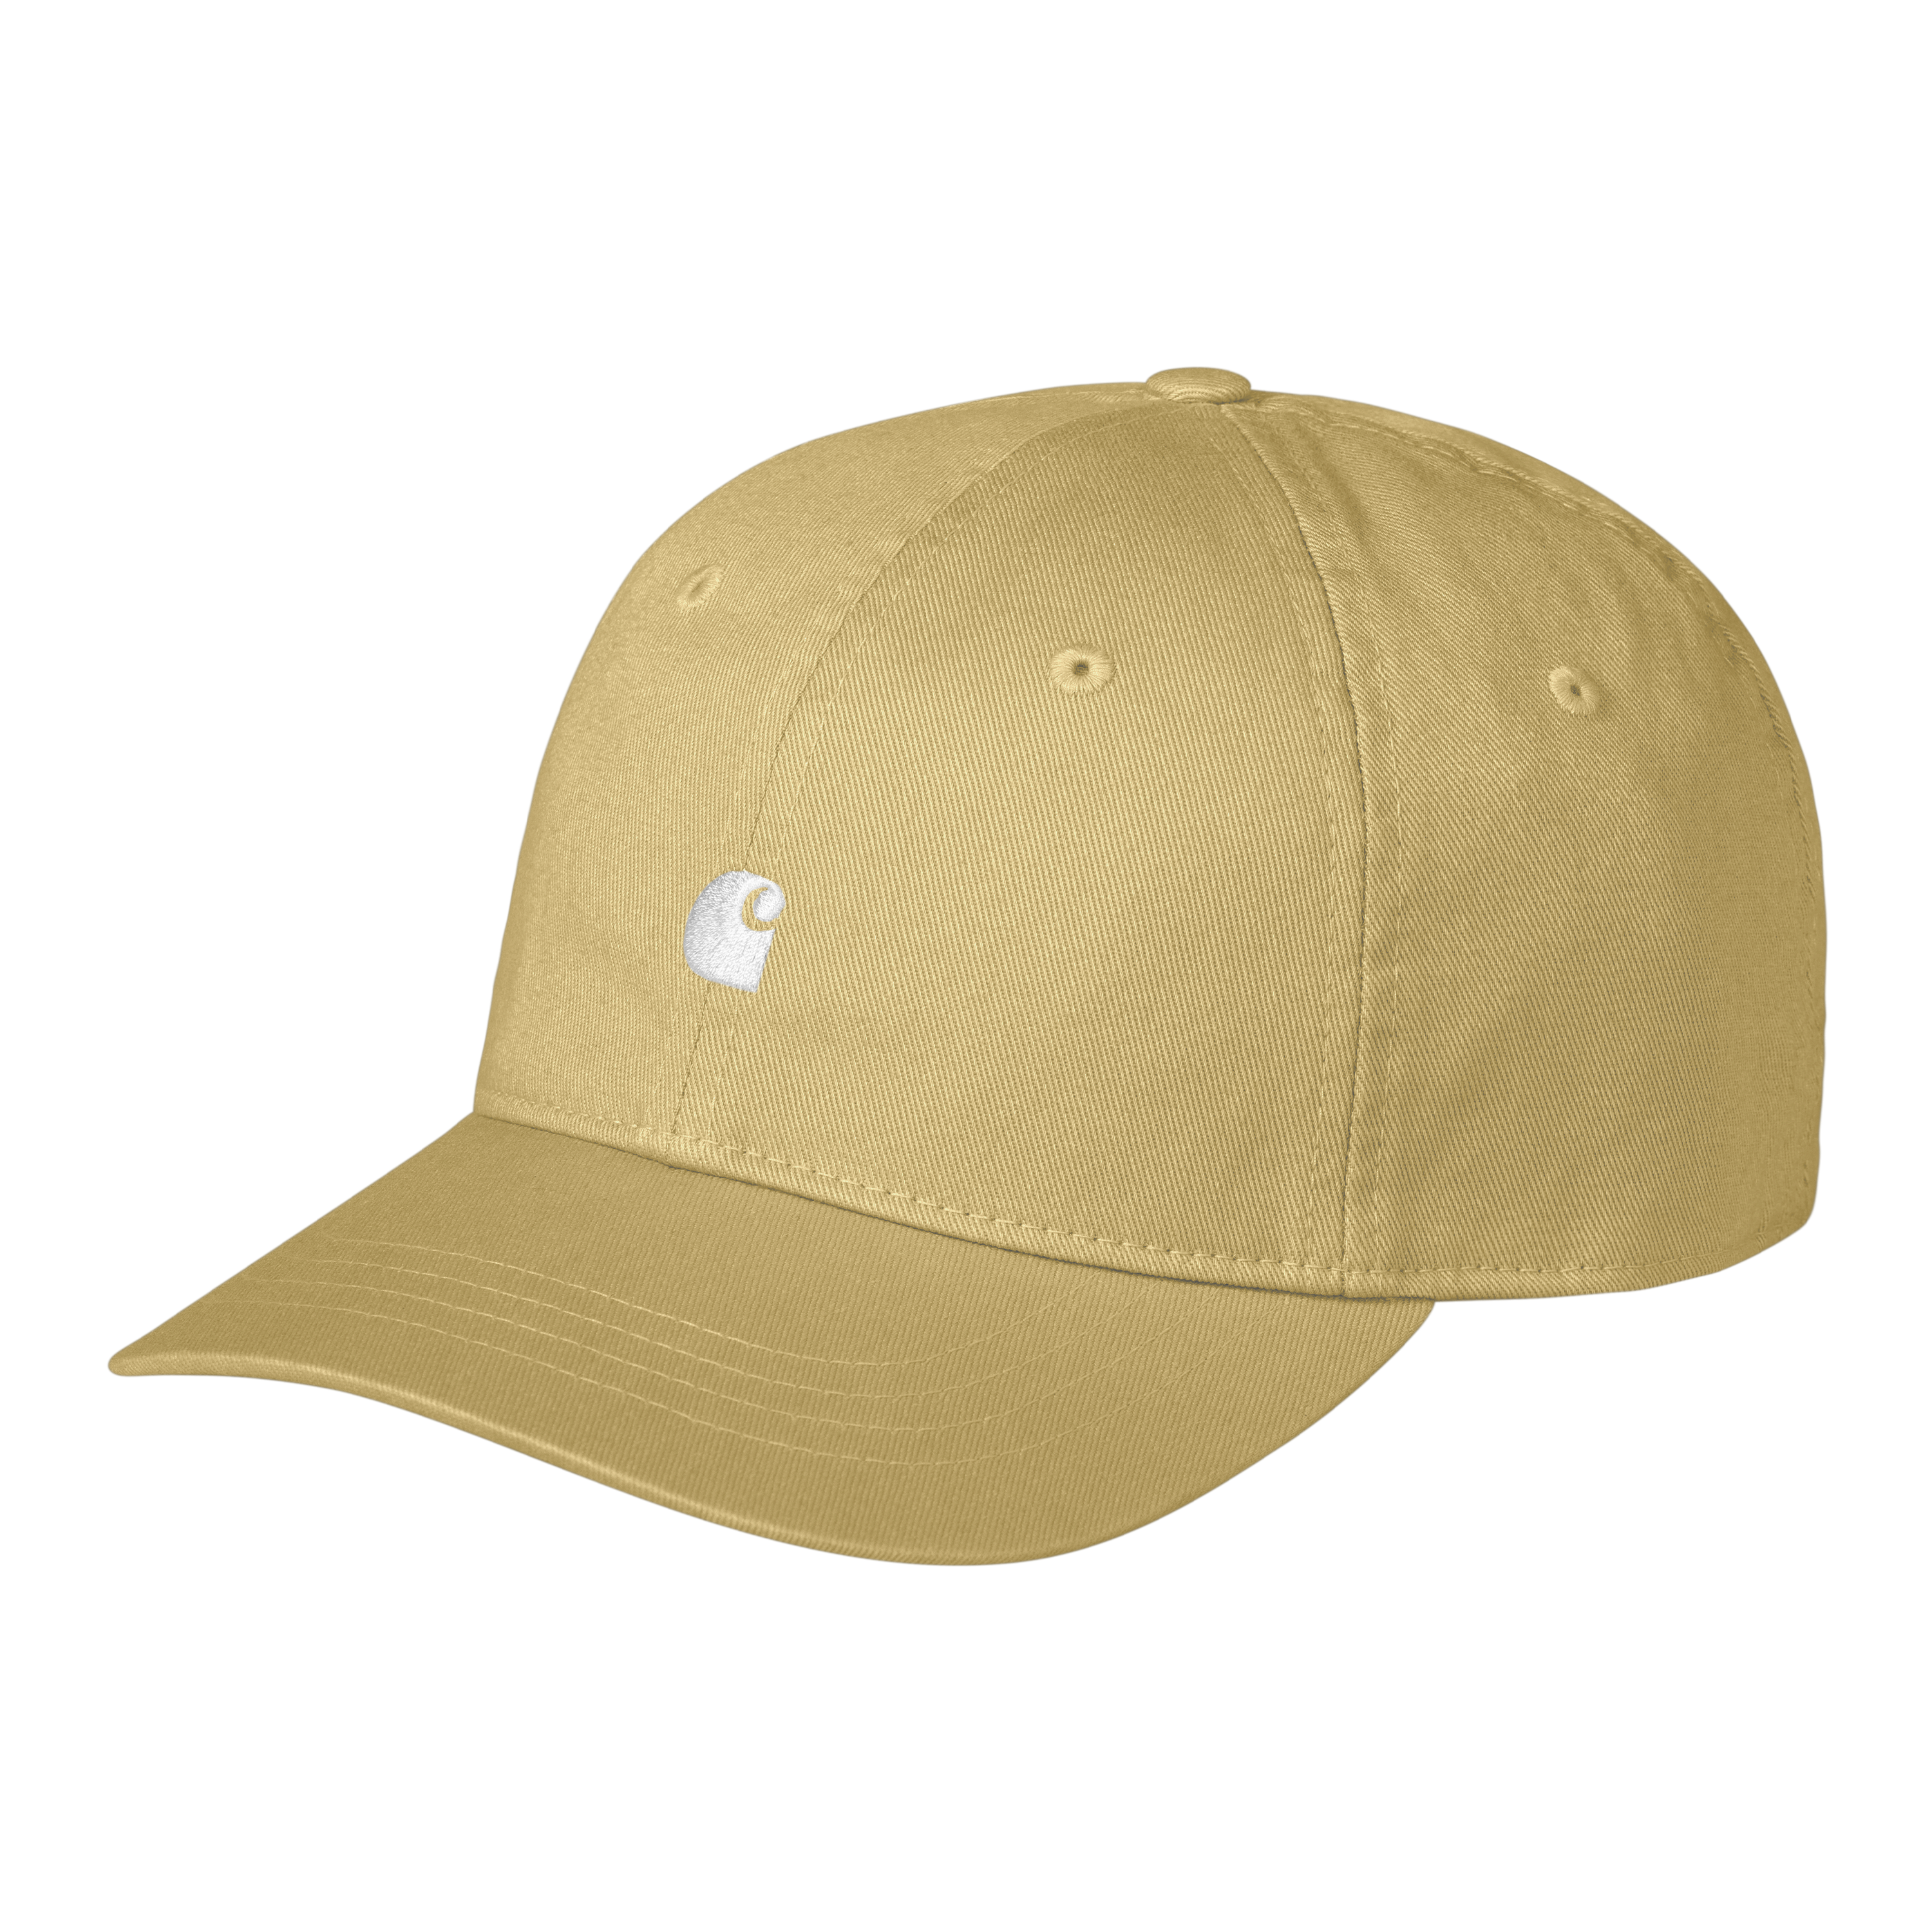 Carhartt 103631 Force Extremes Fish Hook Logo Cap Dark Khaki - Baseball Caps  - Hats & Caps - Leisurewear - Best Workwear